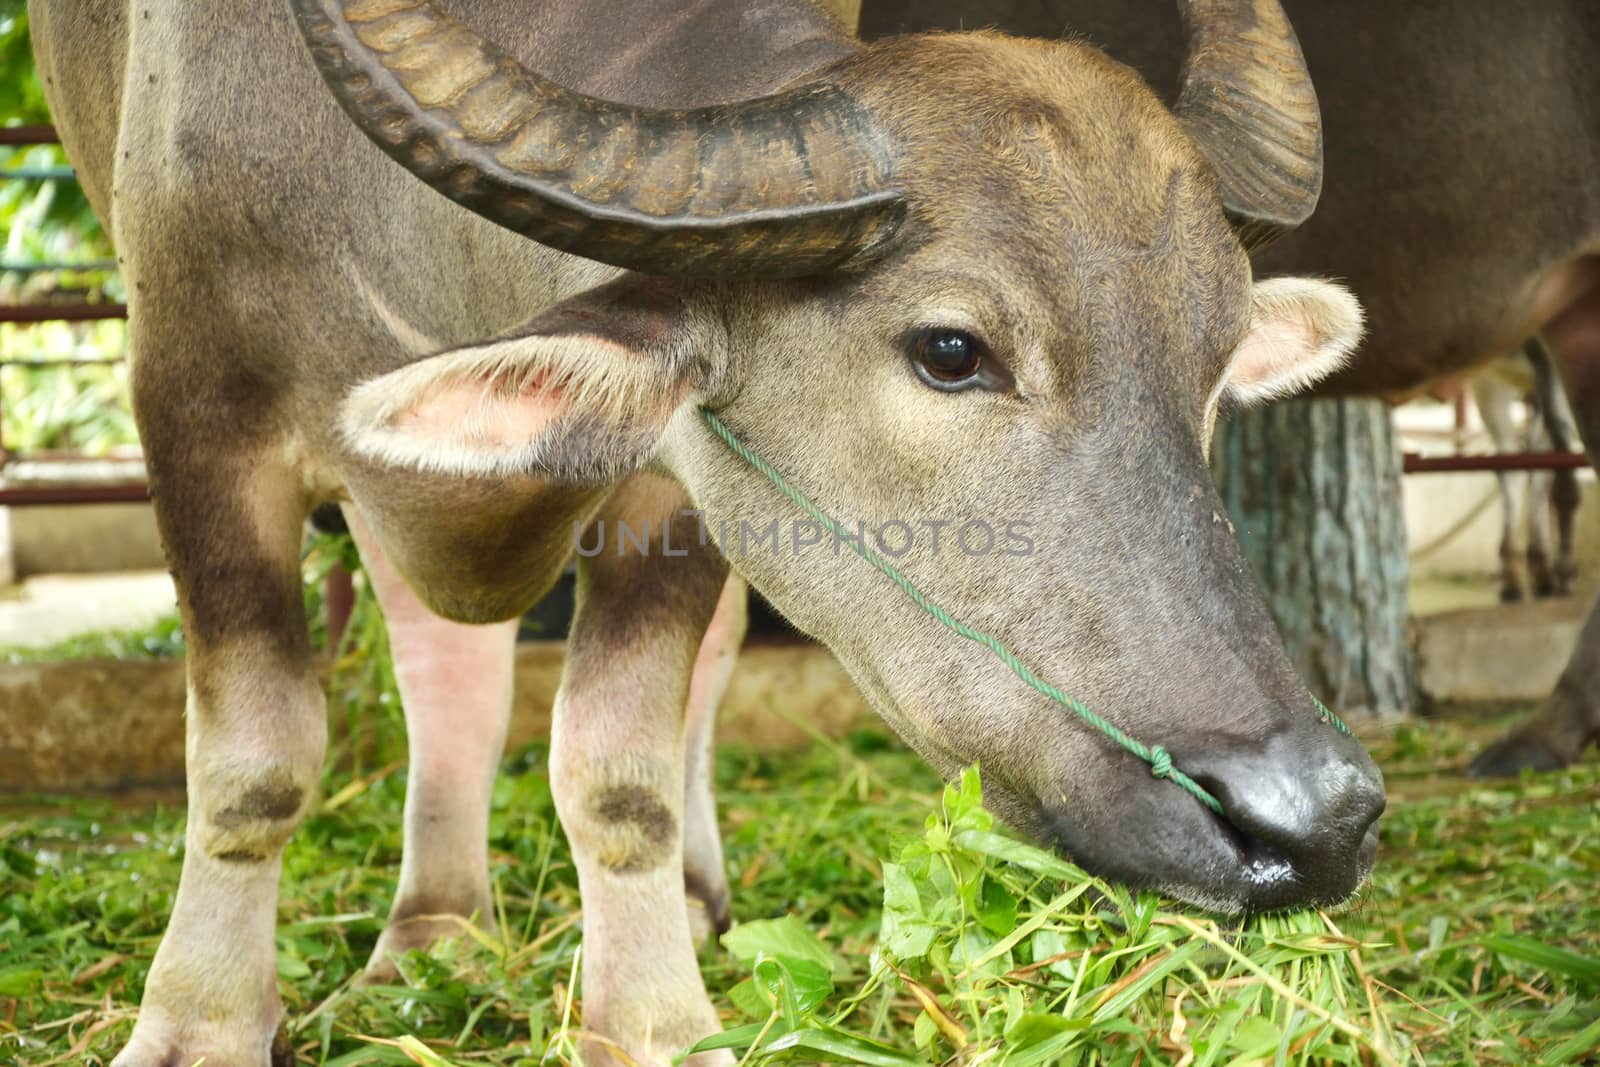 Thai buffalo by think4photop